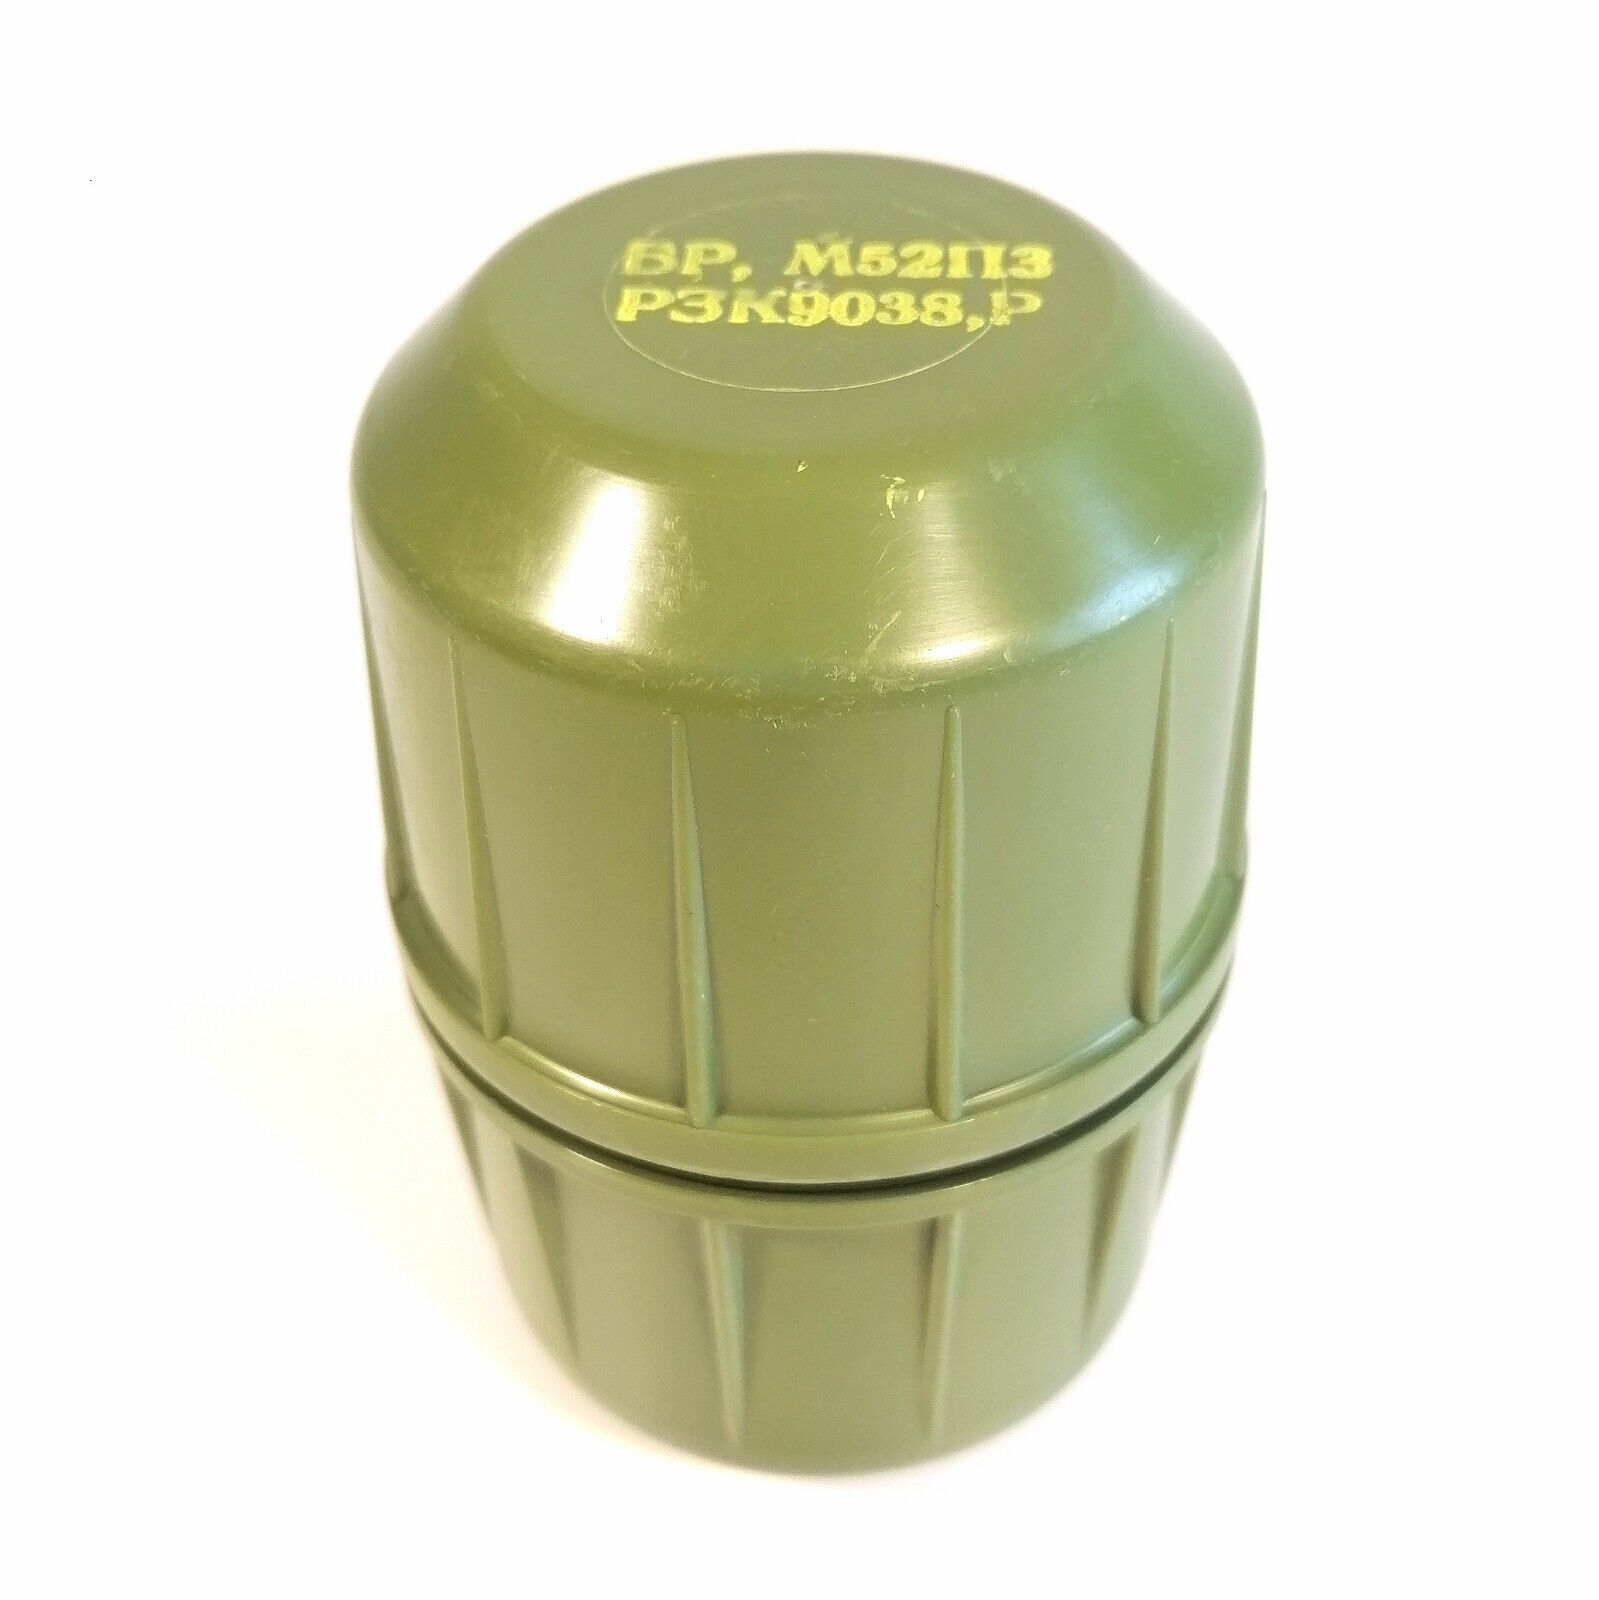 Genuine Yugo Military Grenade Case for M52 Hand Grenade Hard Plastic Waterproof